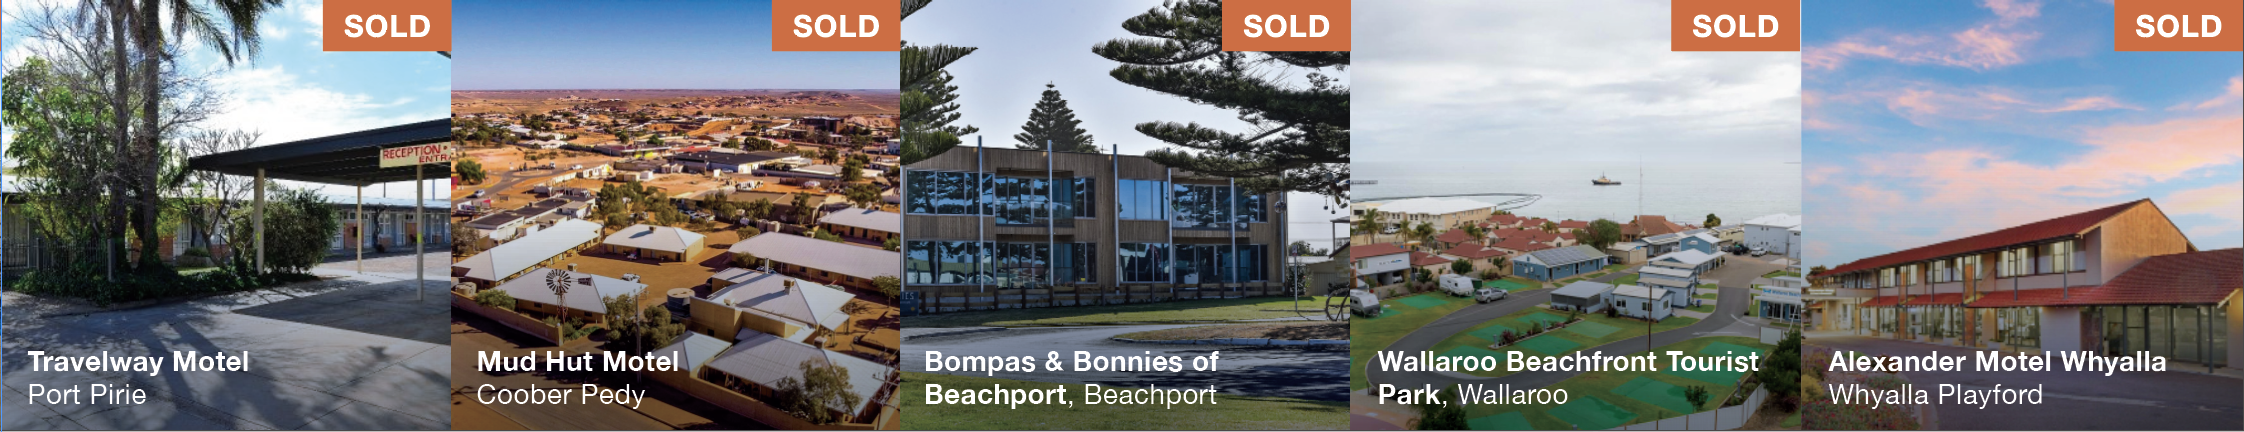 South Australia Sold Properties